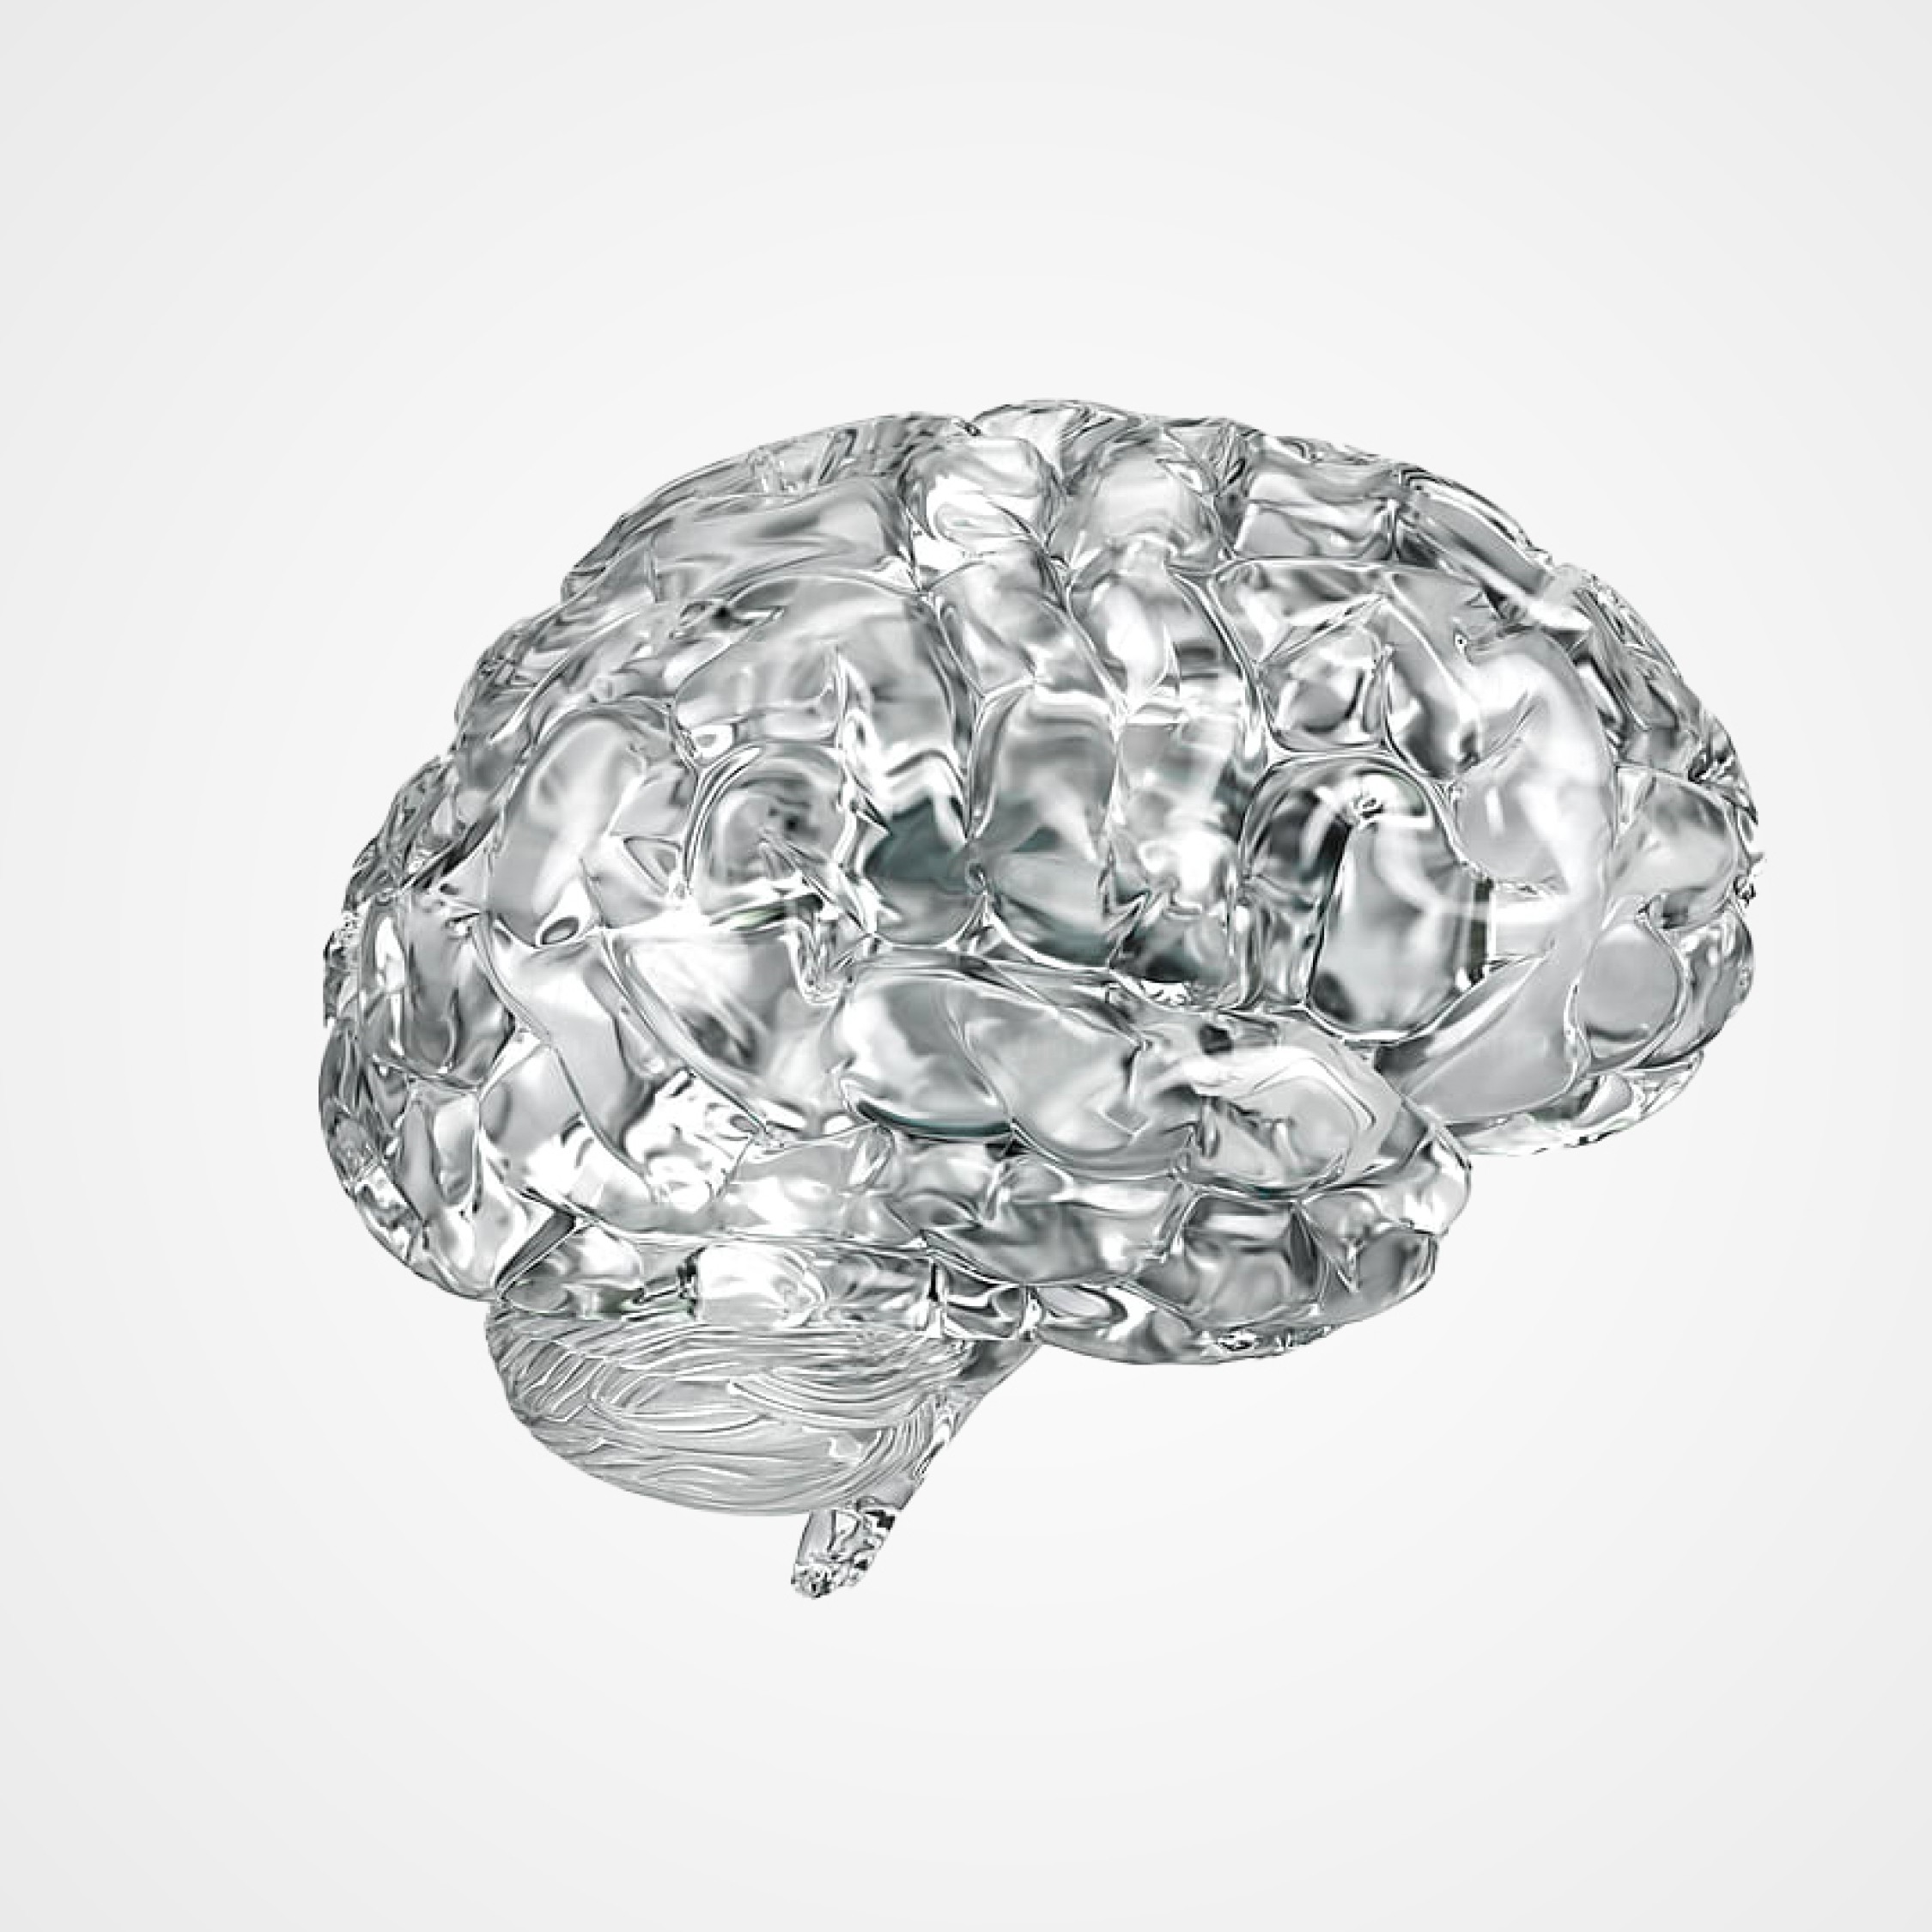 A crystal brain